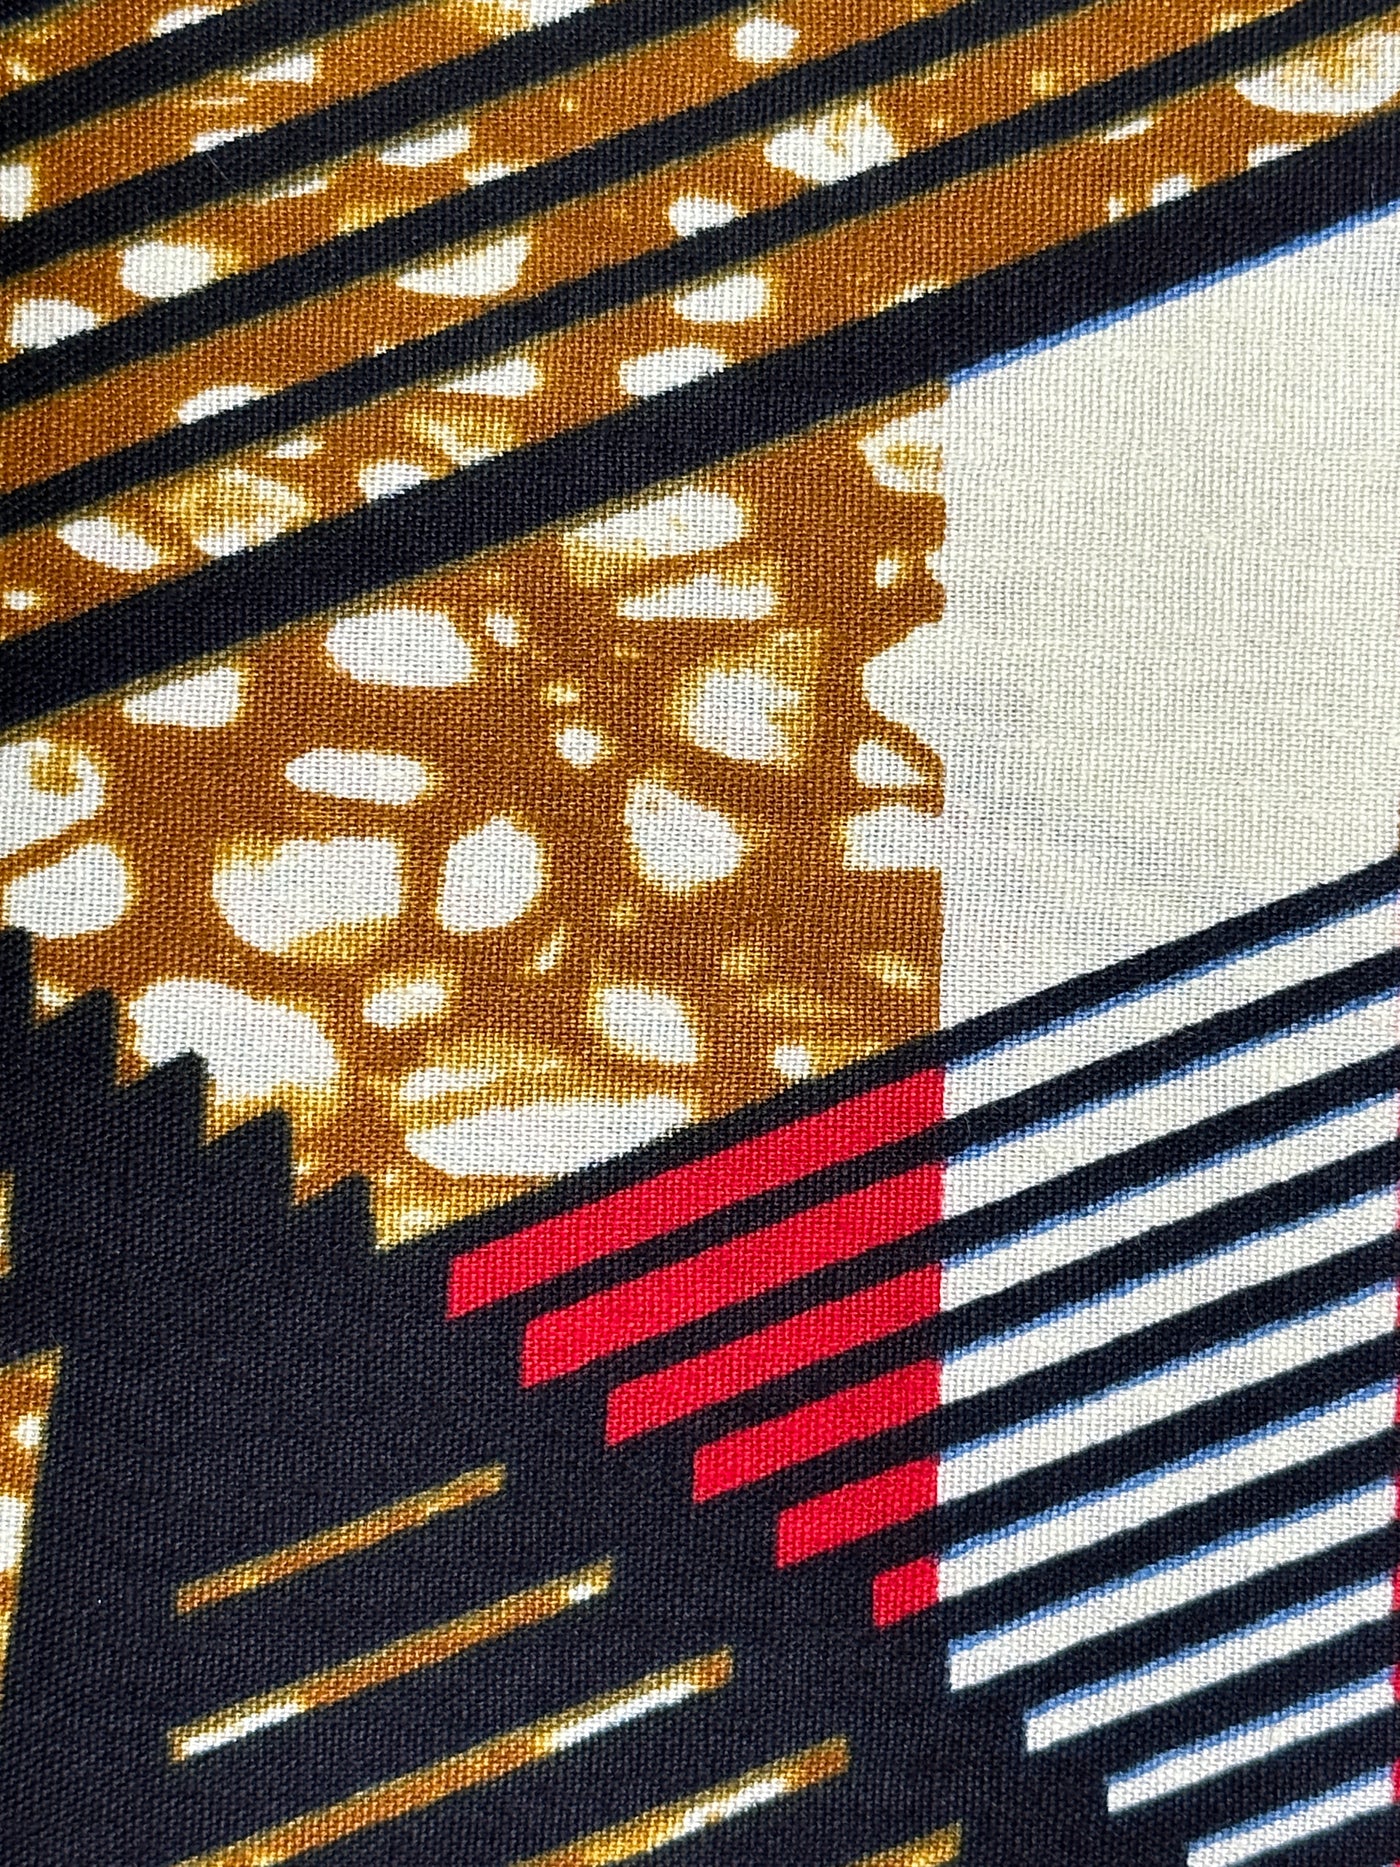 Ankara Fabric - 237202